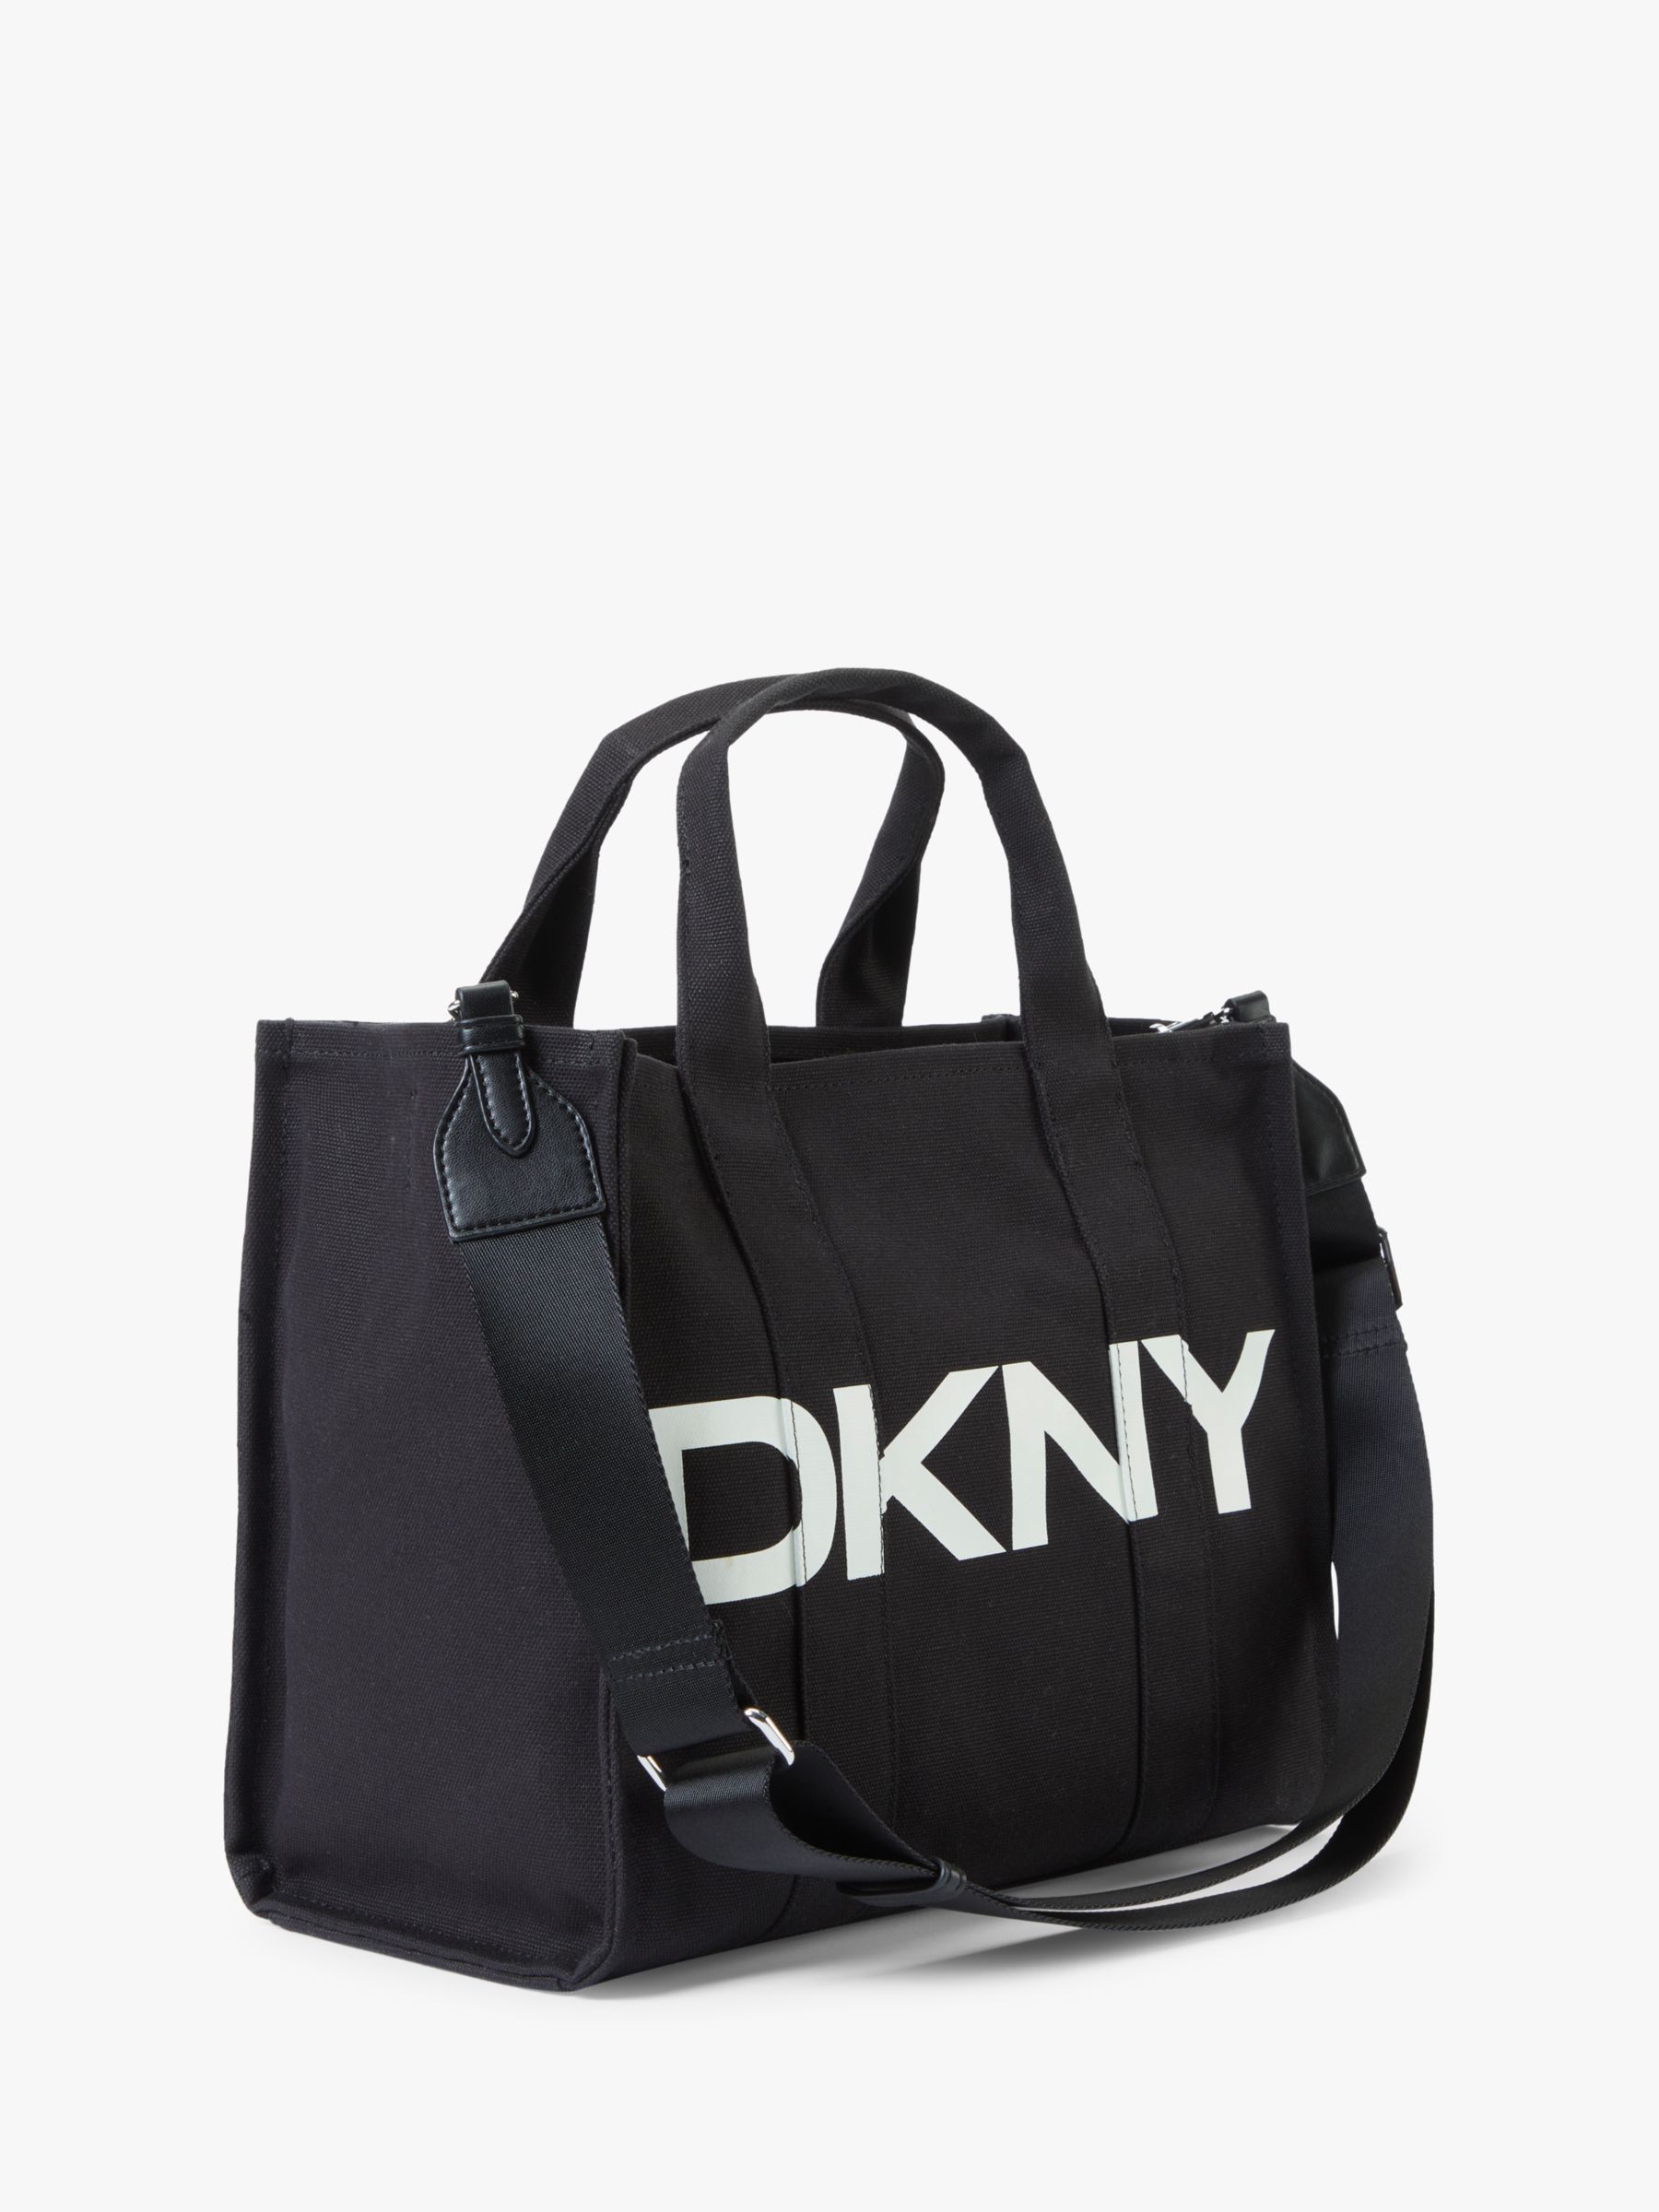 DKNY Emilee Logo Large Canvas Tote Bag, Black/White